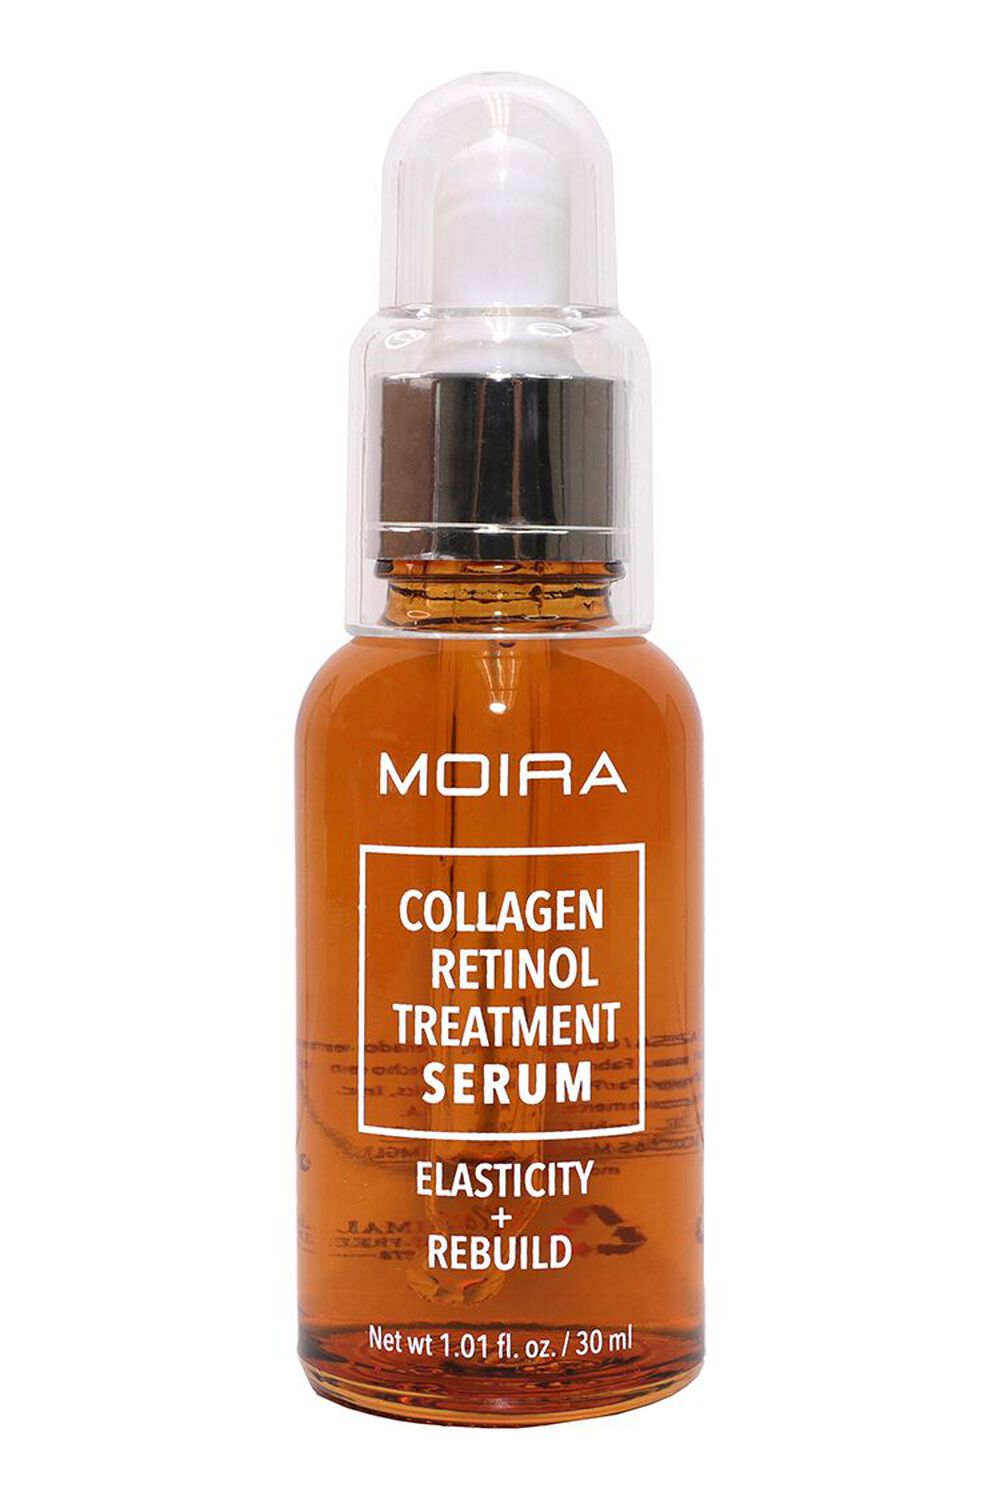 MOIRA Collagen Retinol Treatment Serum, image 2